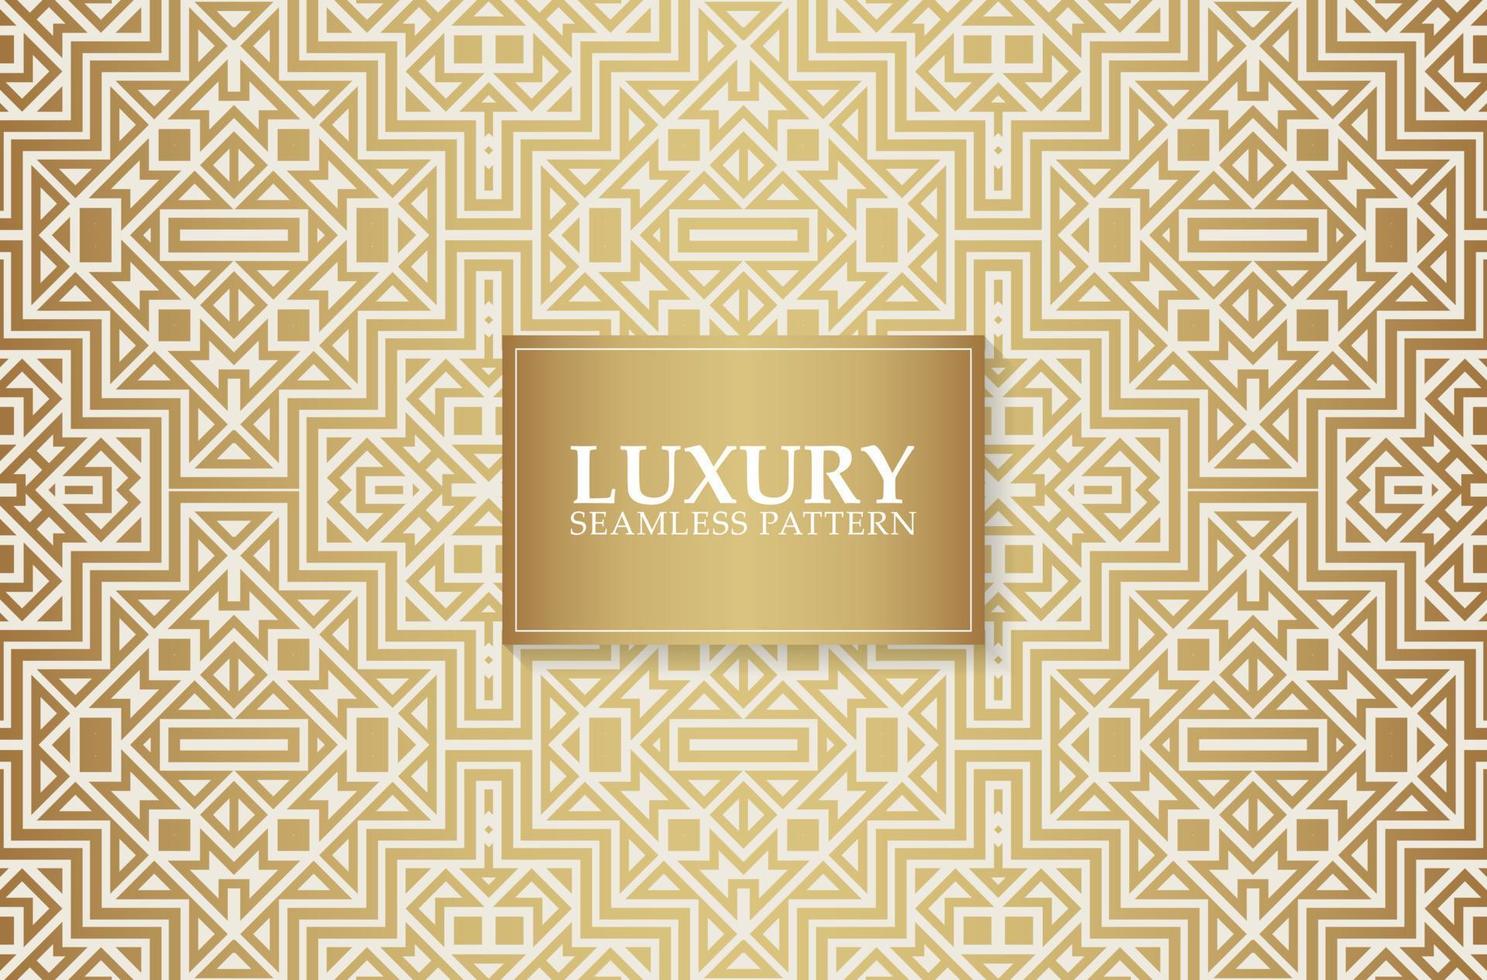 Luxury white ornament pattern design background vector